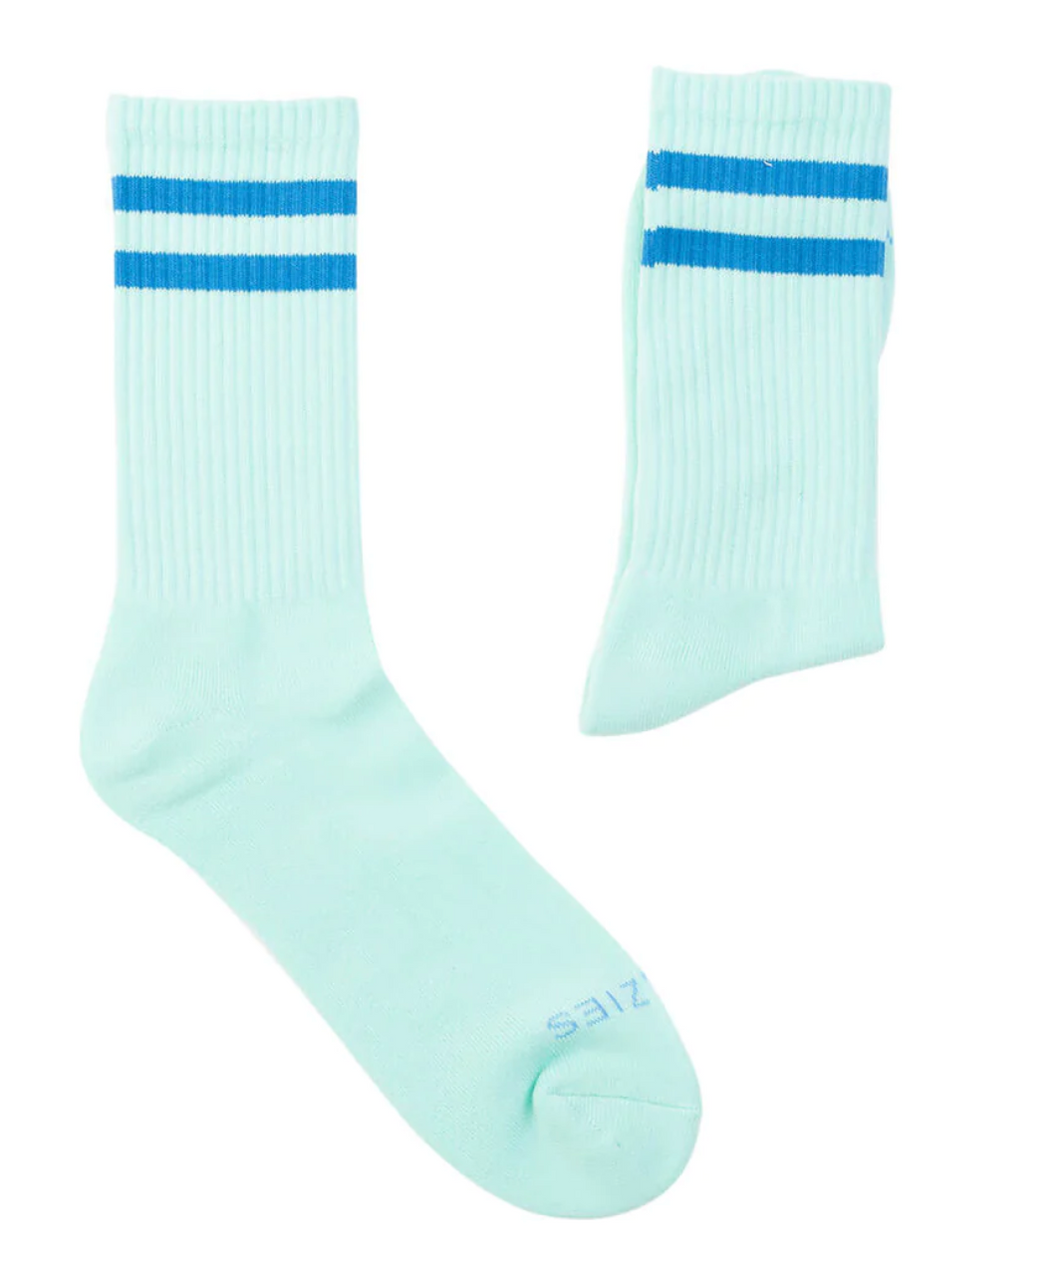 Socks - Mint & Royal Blue